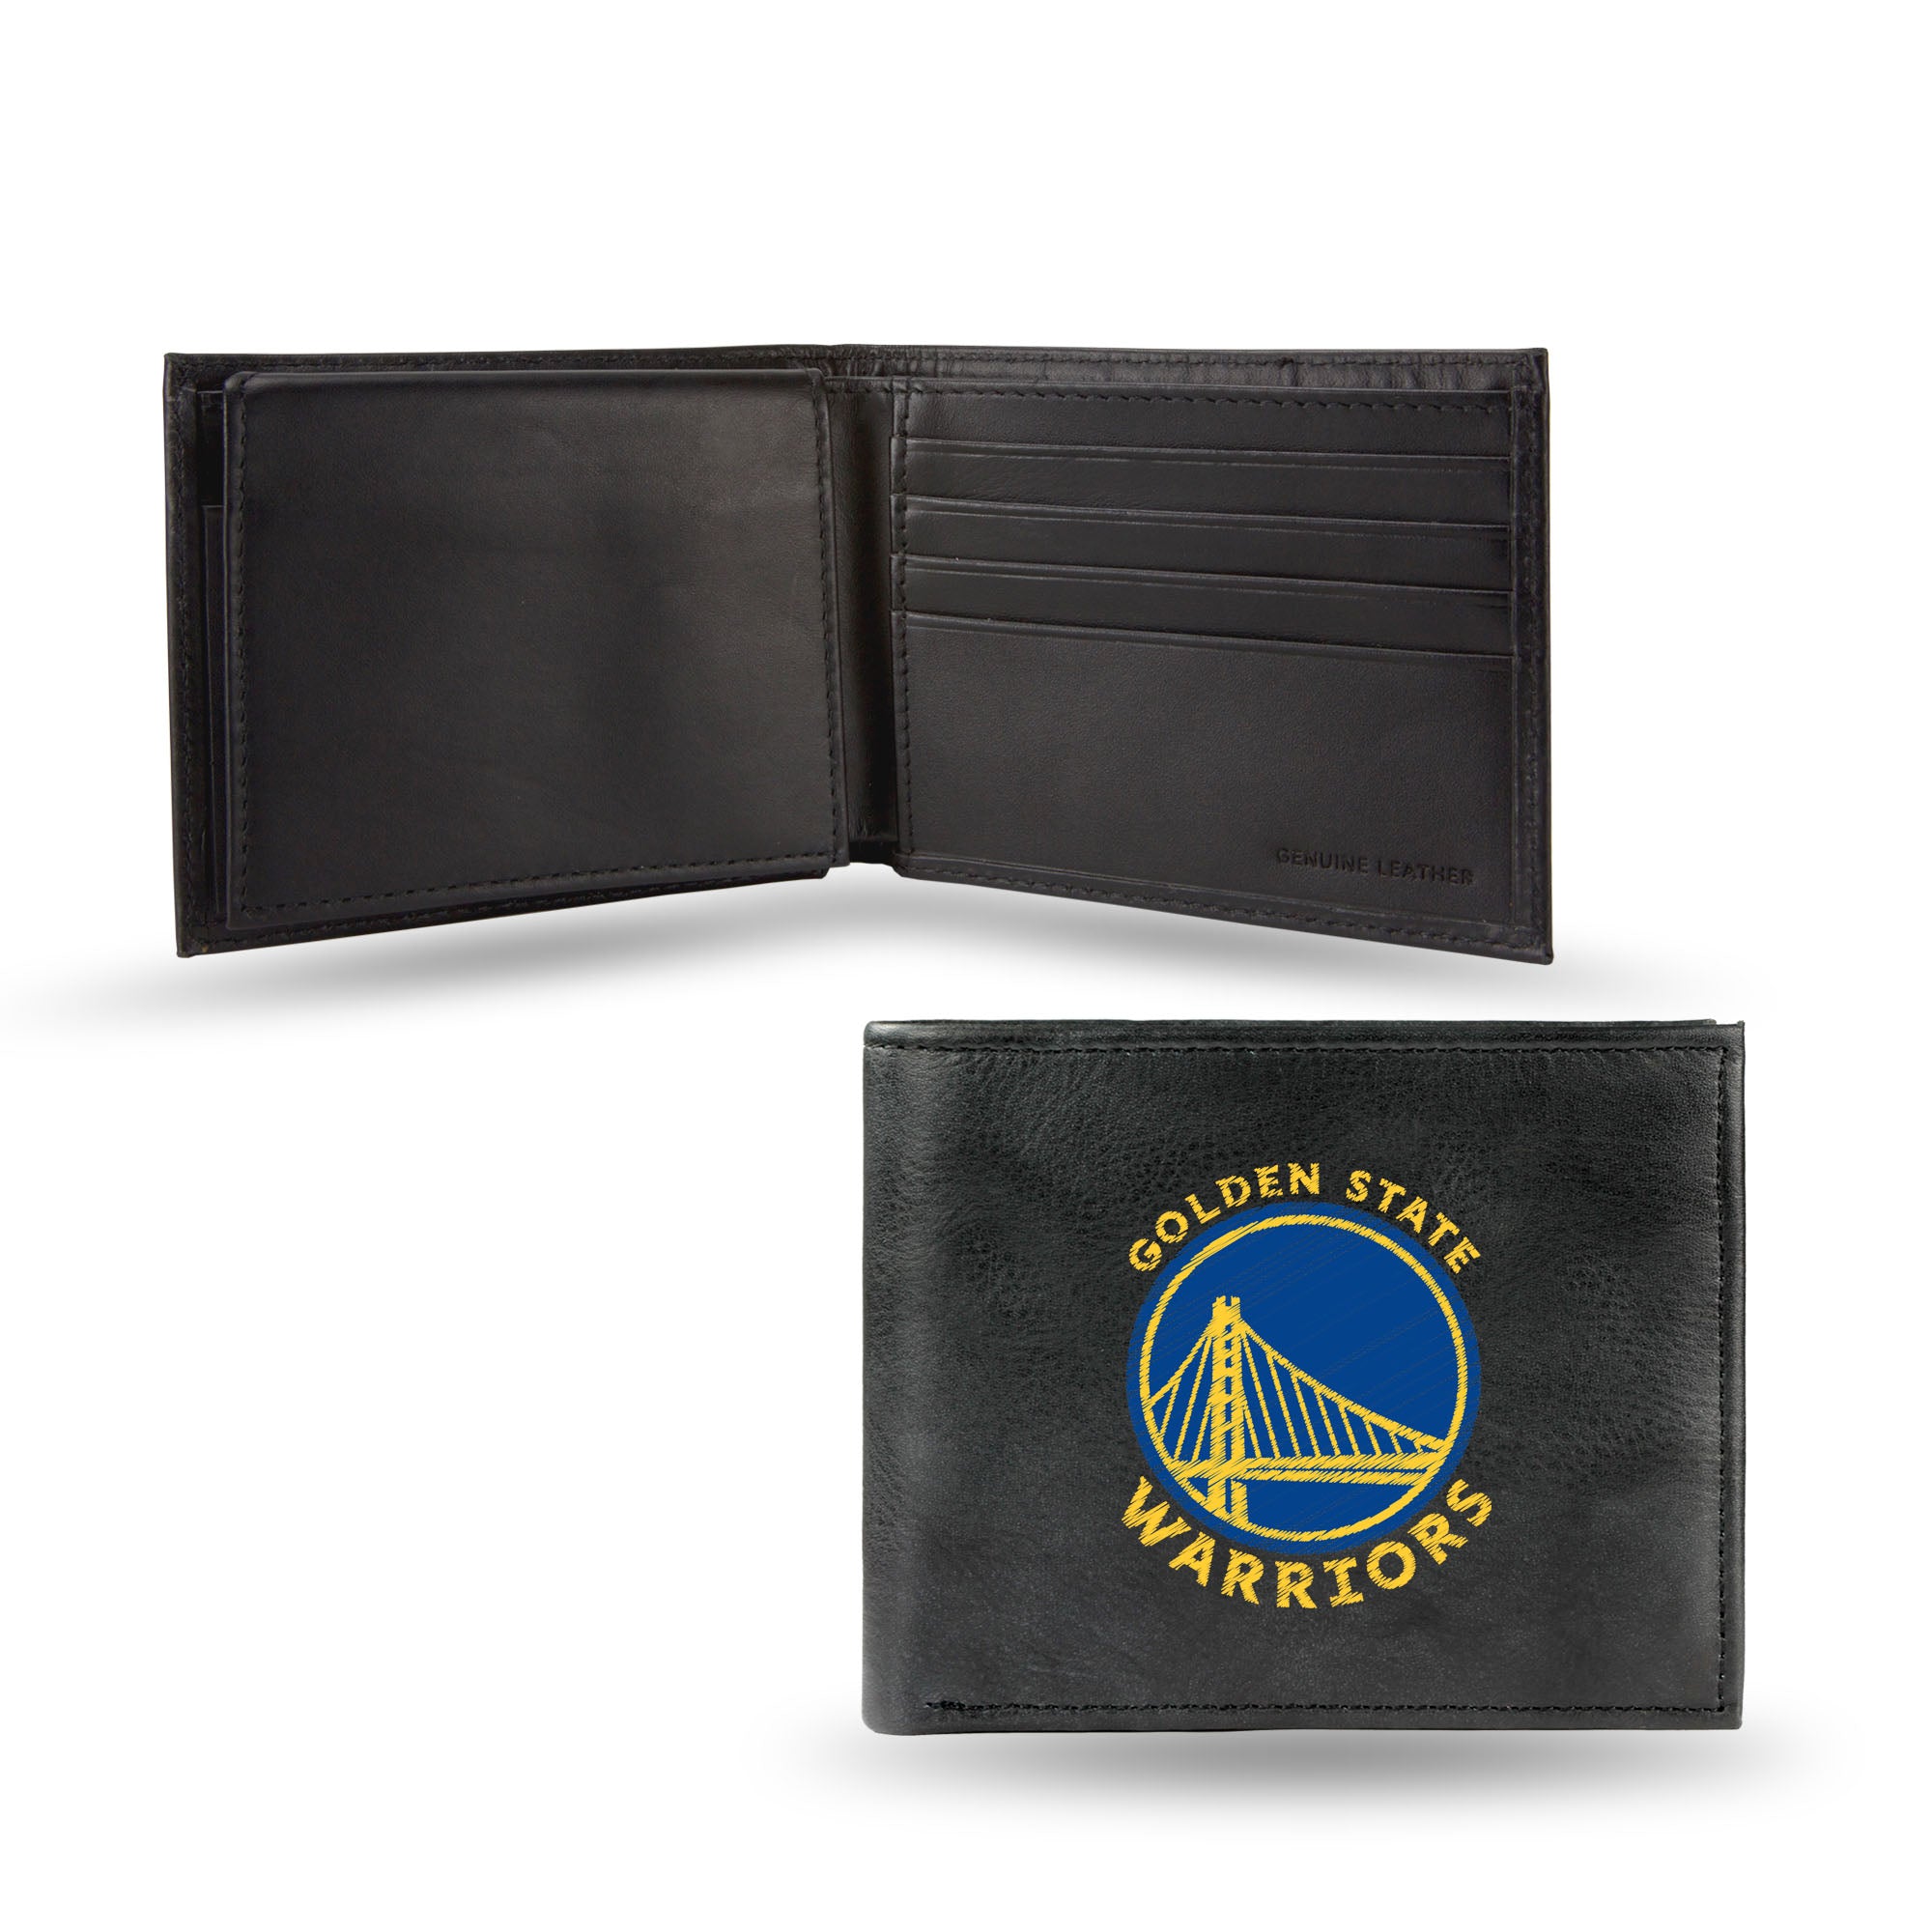 Golden State Warriors Embroidered Billfold Wallet